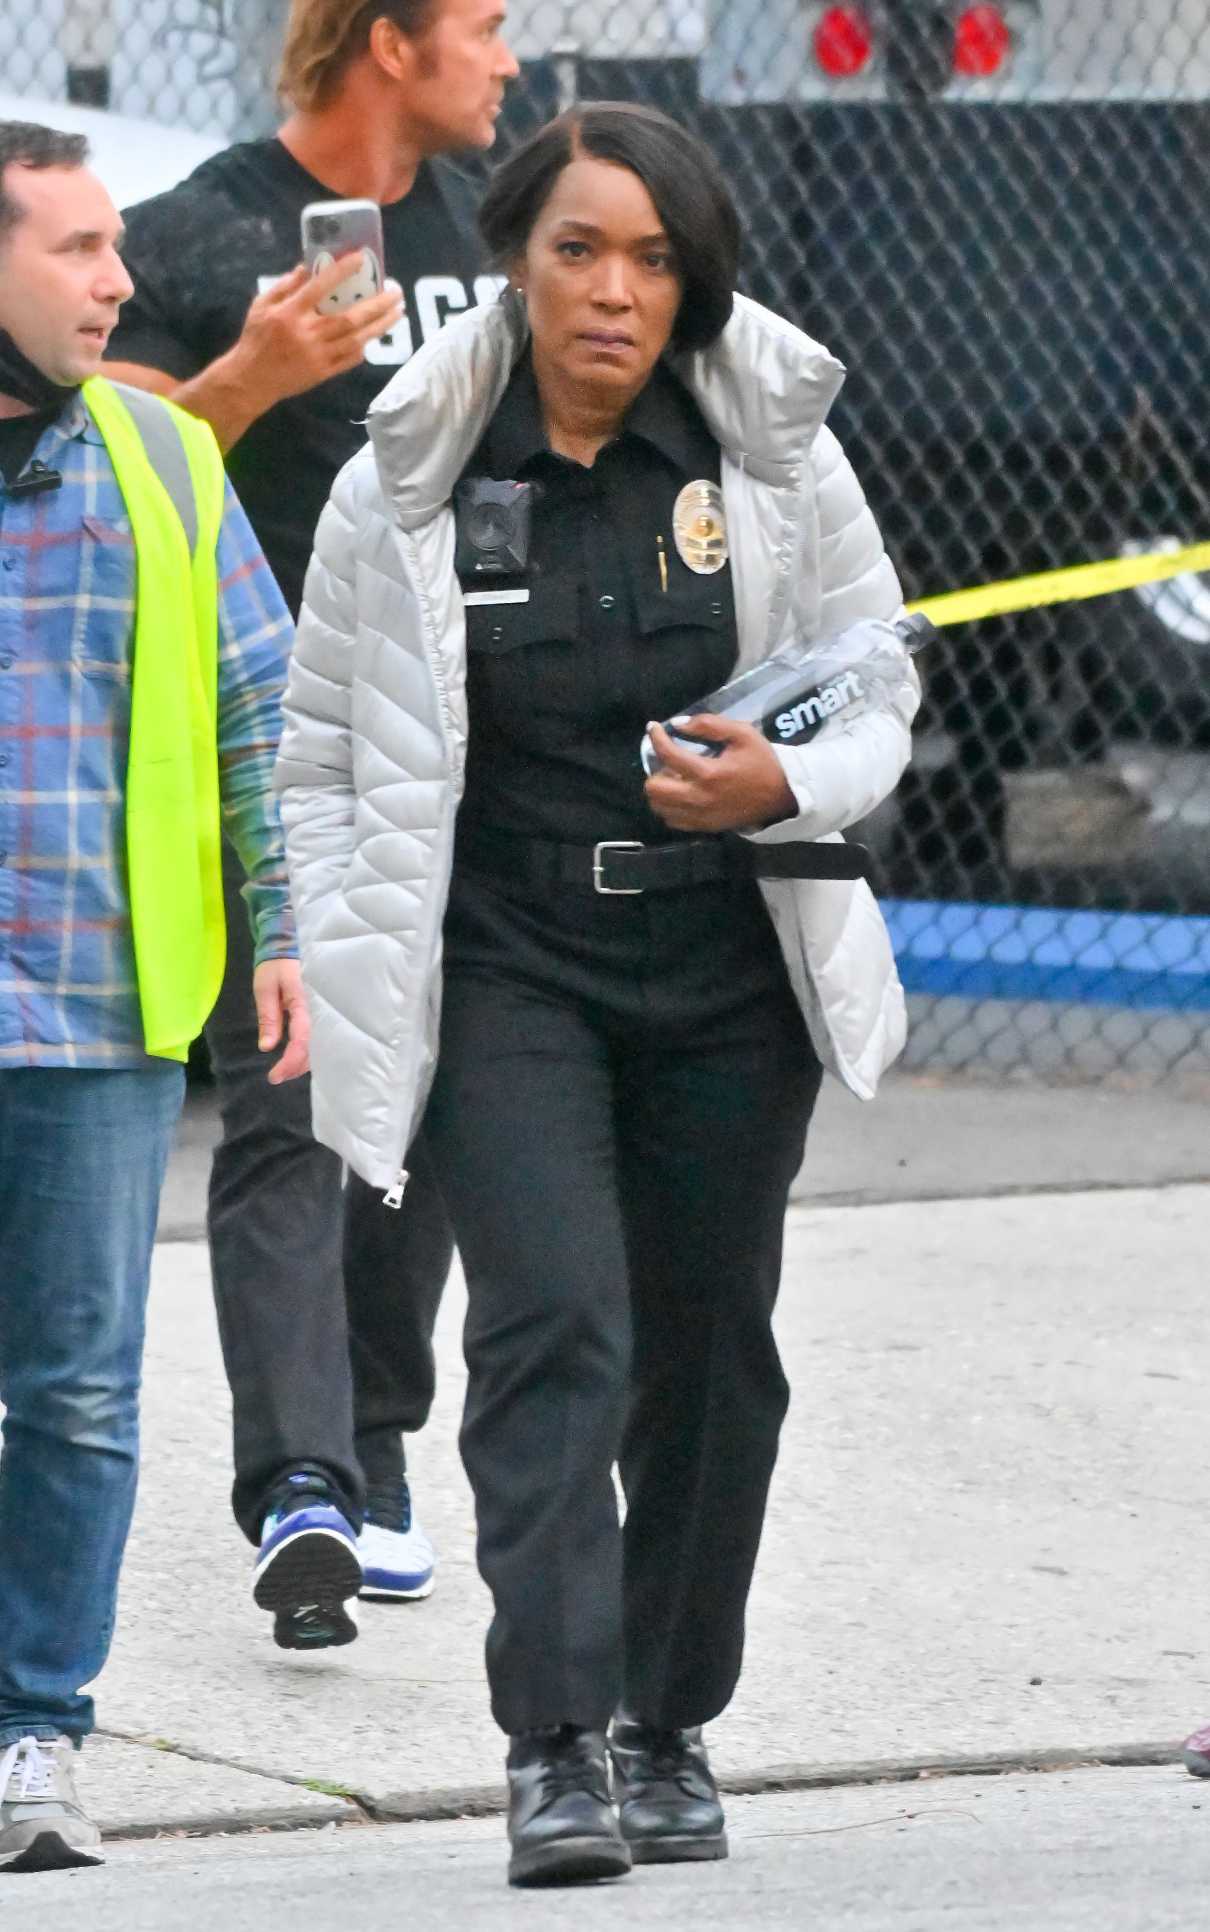 Angela Bassett in a Police Officer Uniform